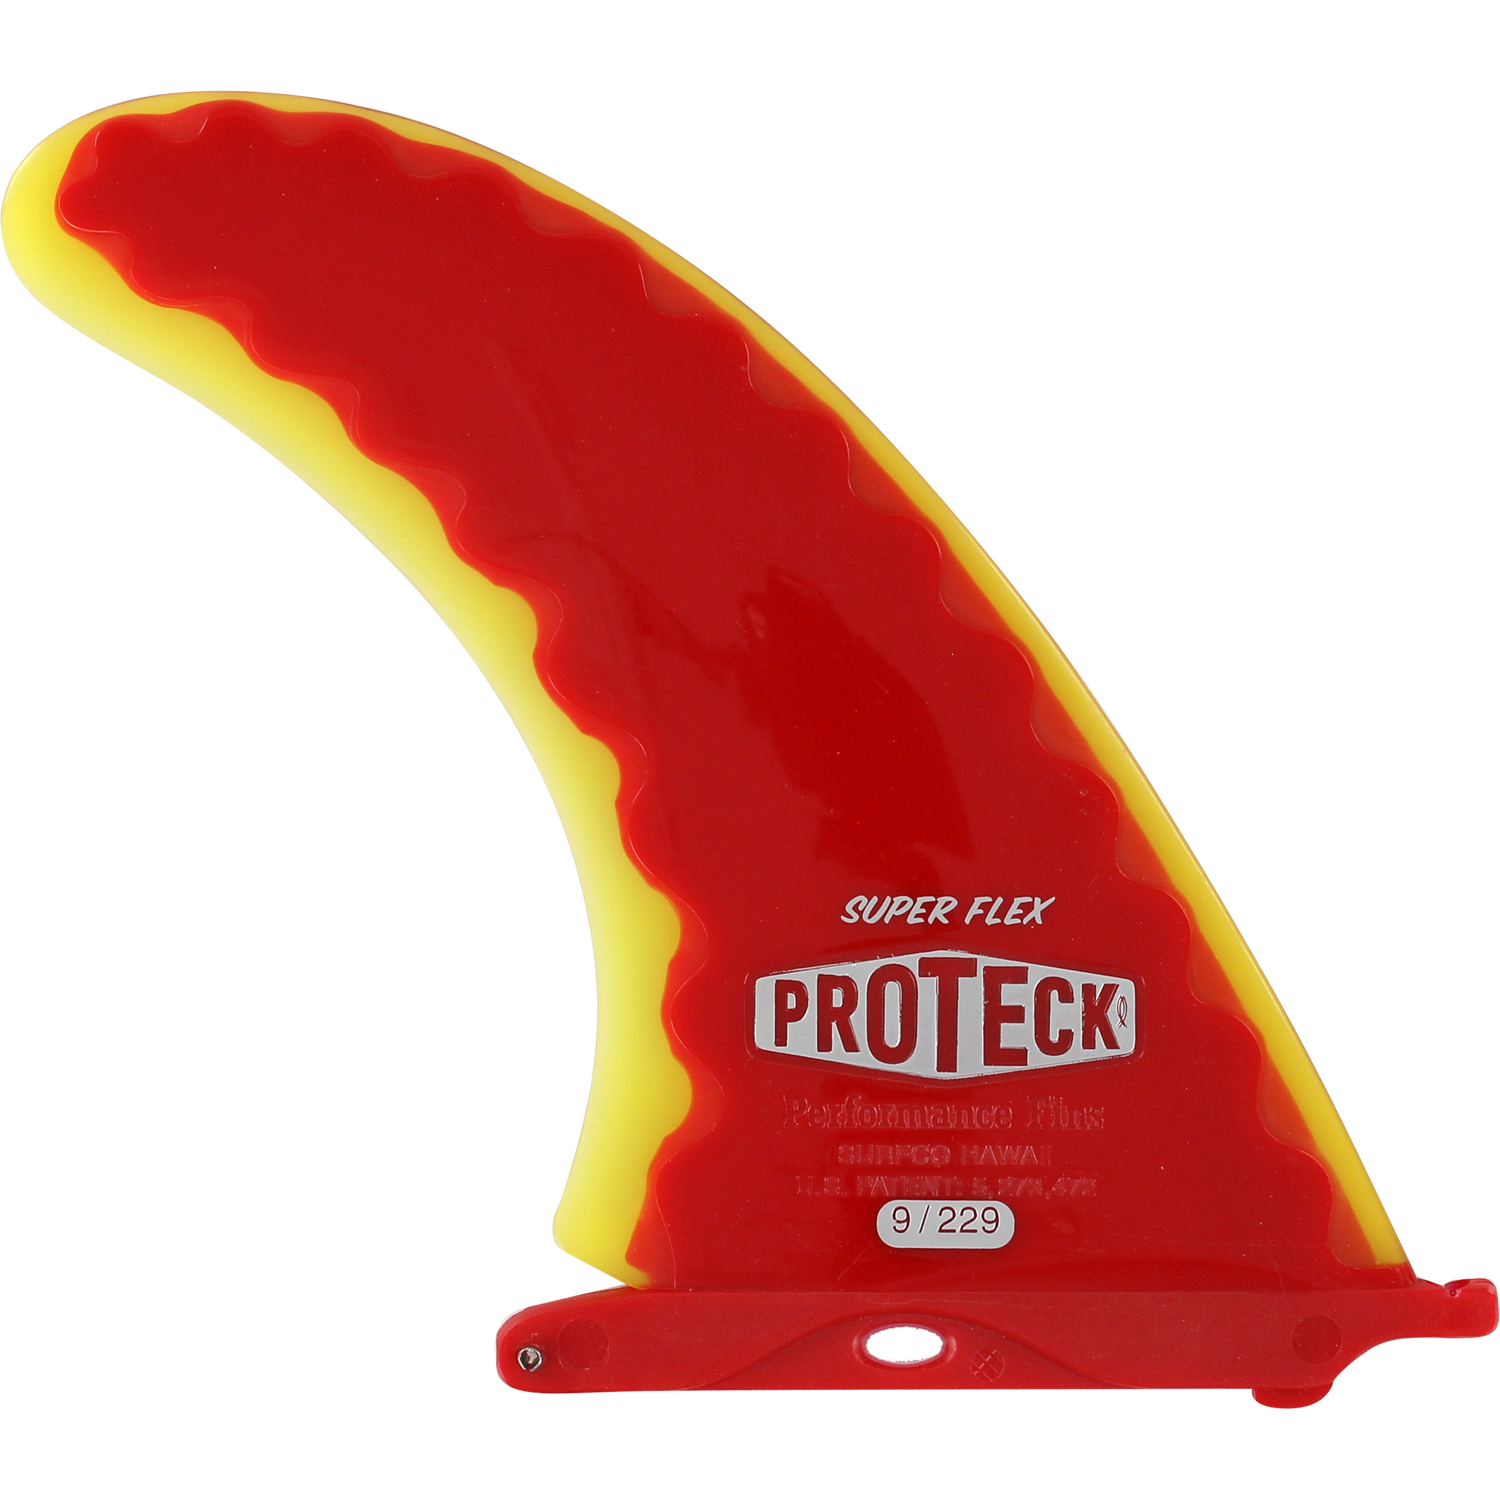 Proteck Super Flex Lb Center 9.0 Red/Yellow Surfboard FIN  -  1 SINGLE FIN